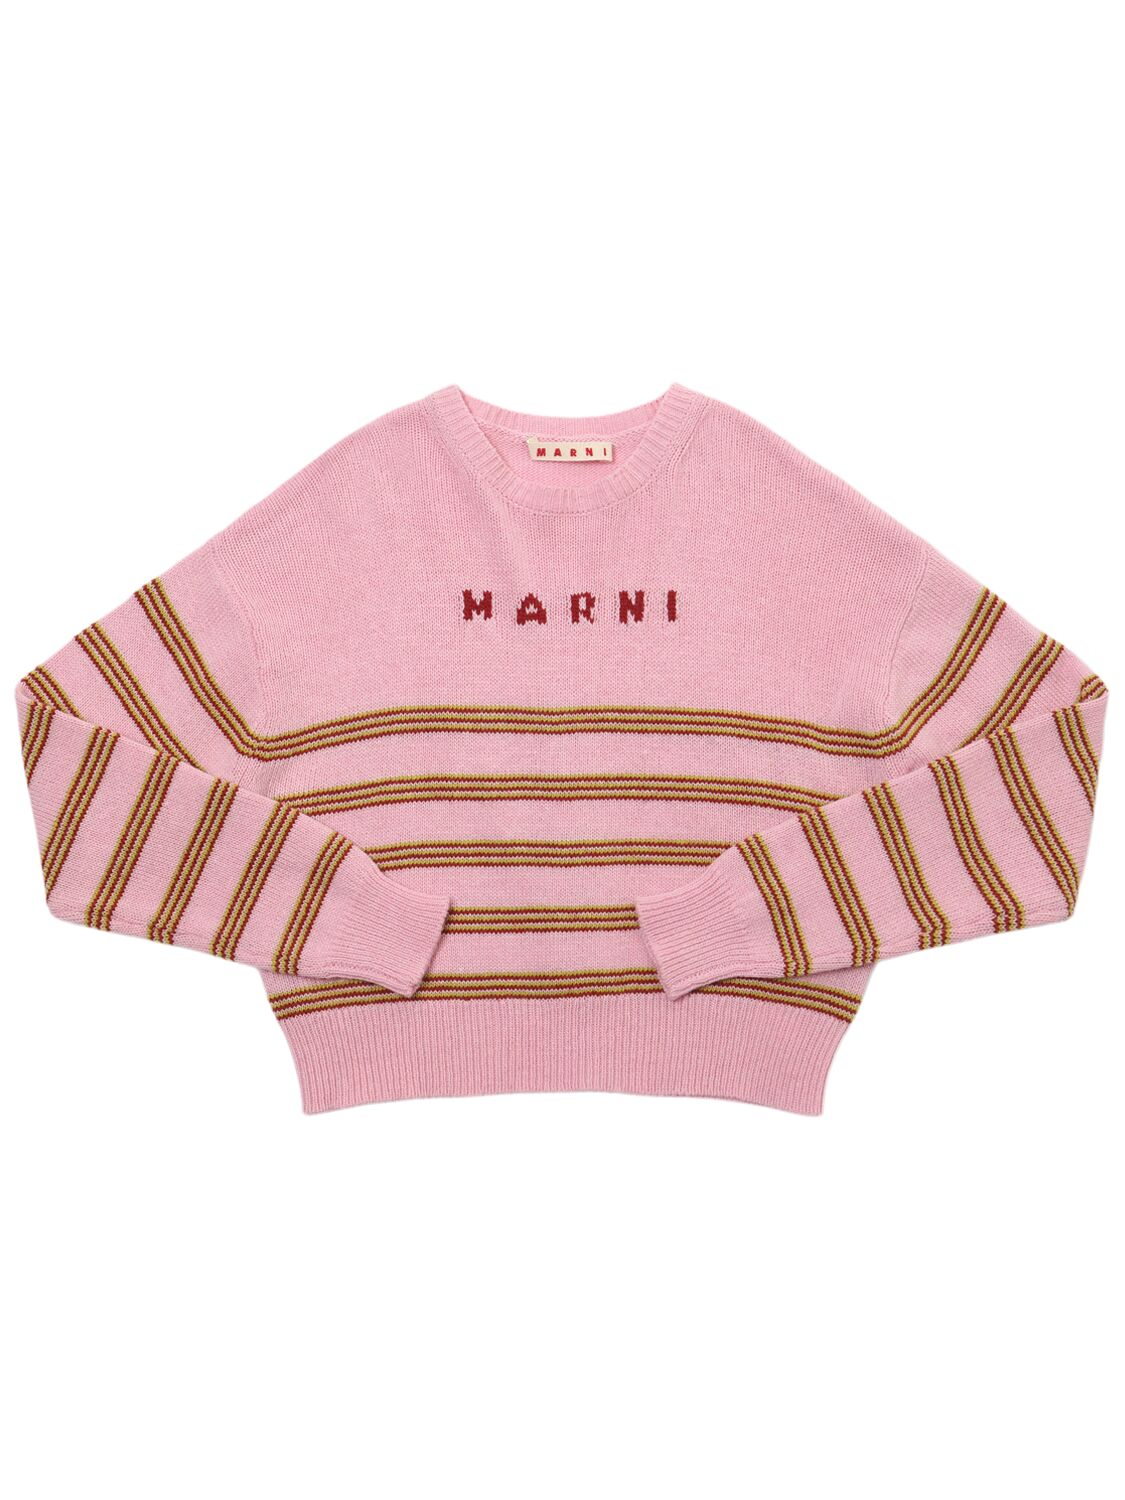 Marni Junior Striped Wool Blend Sweater W/logo In Pink/multi